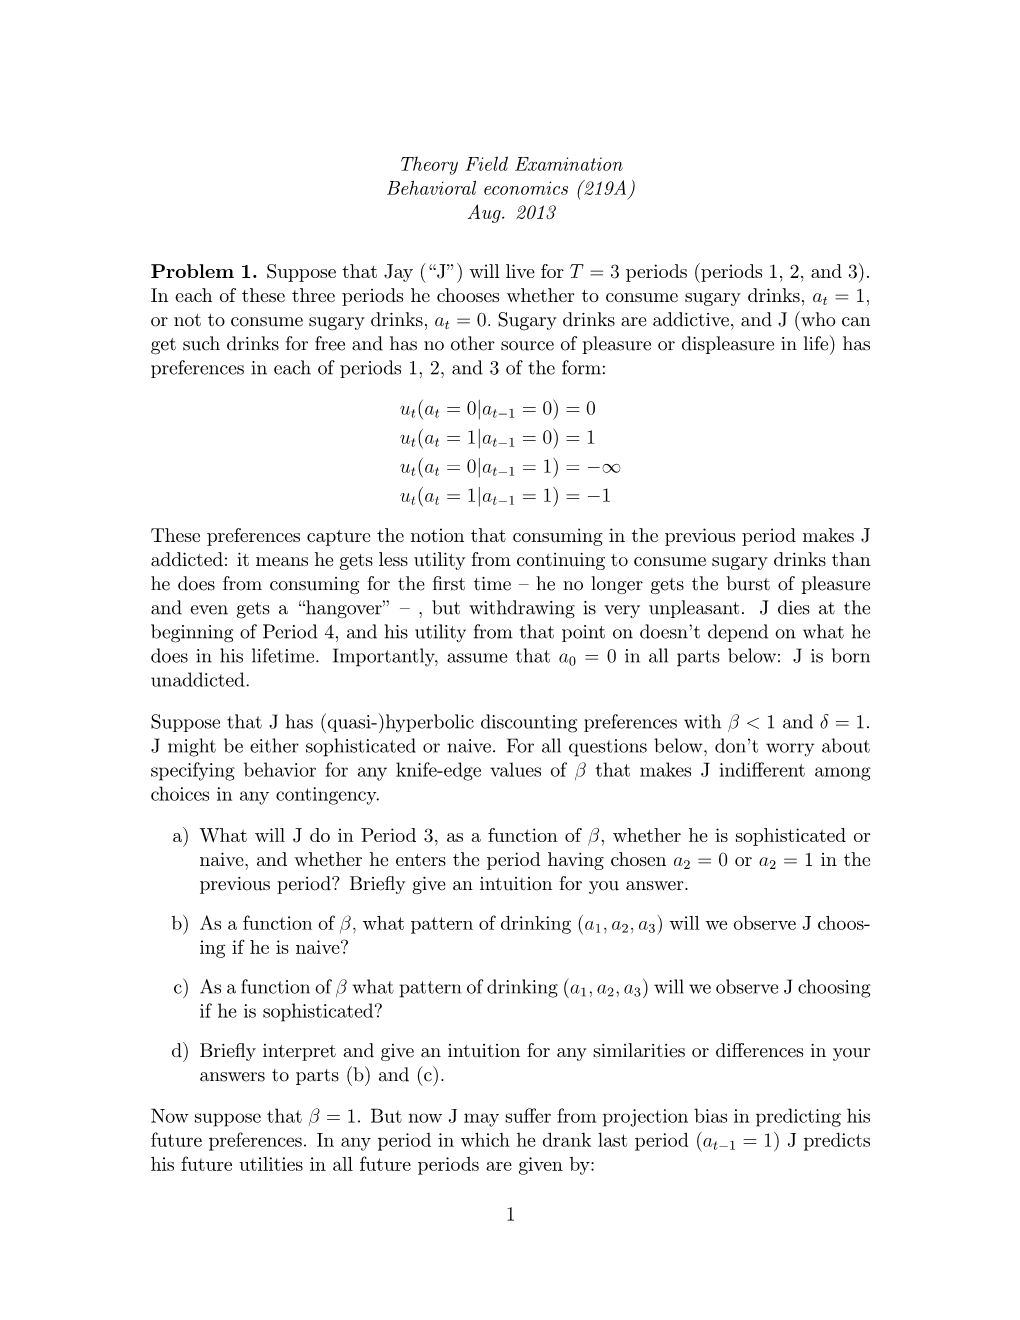 Advanced Theory Field Exam, August 2013